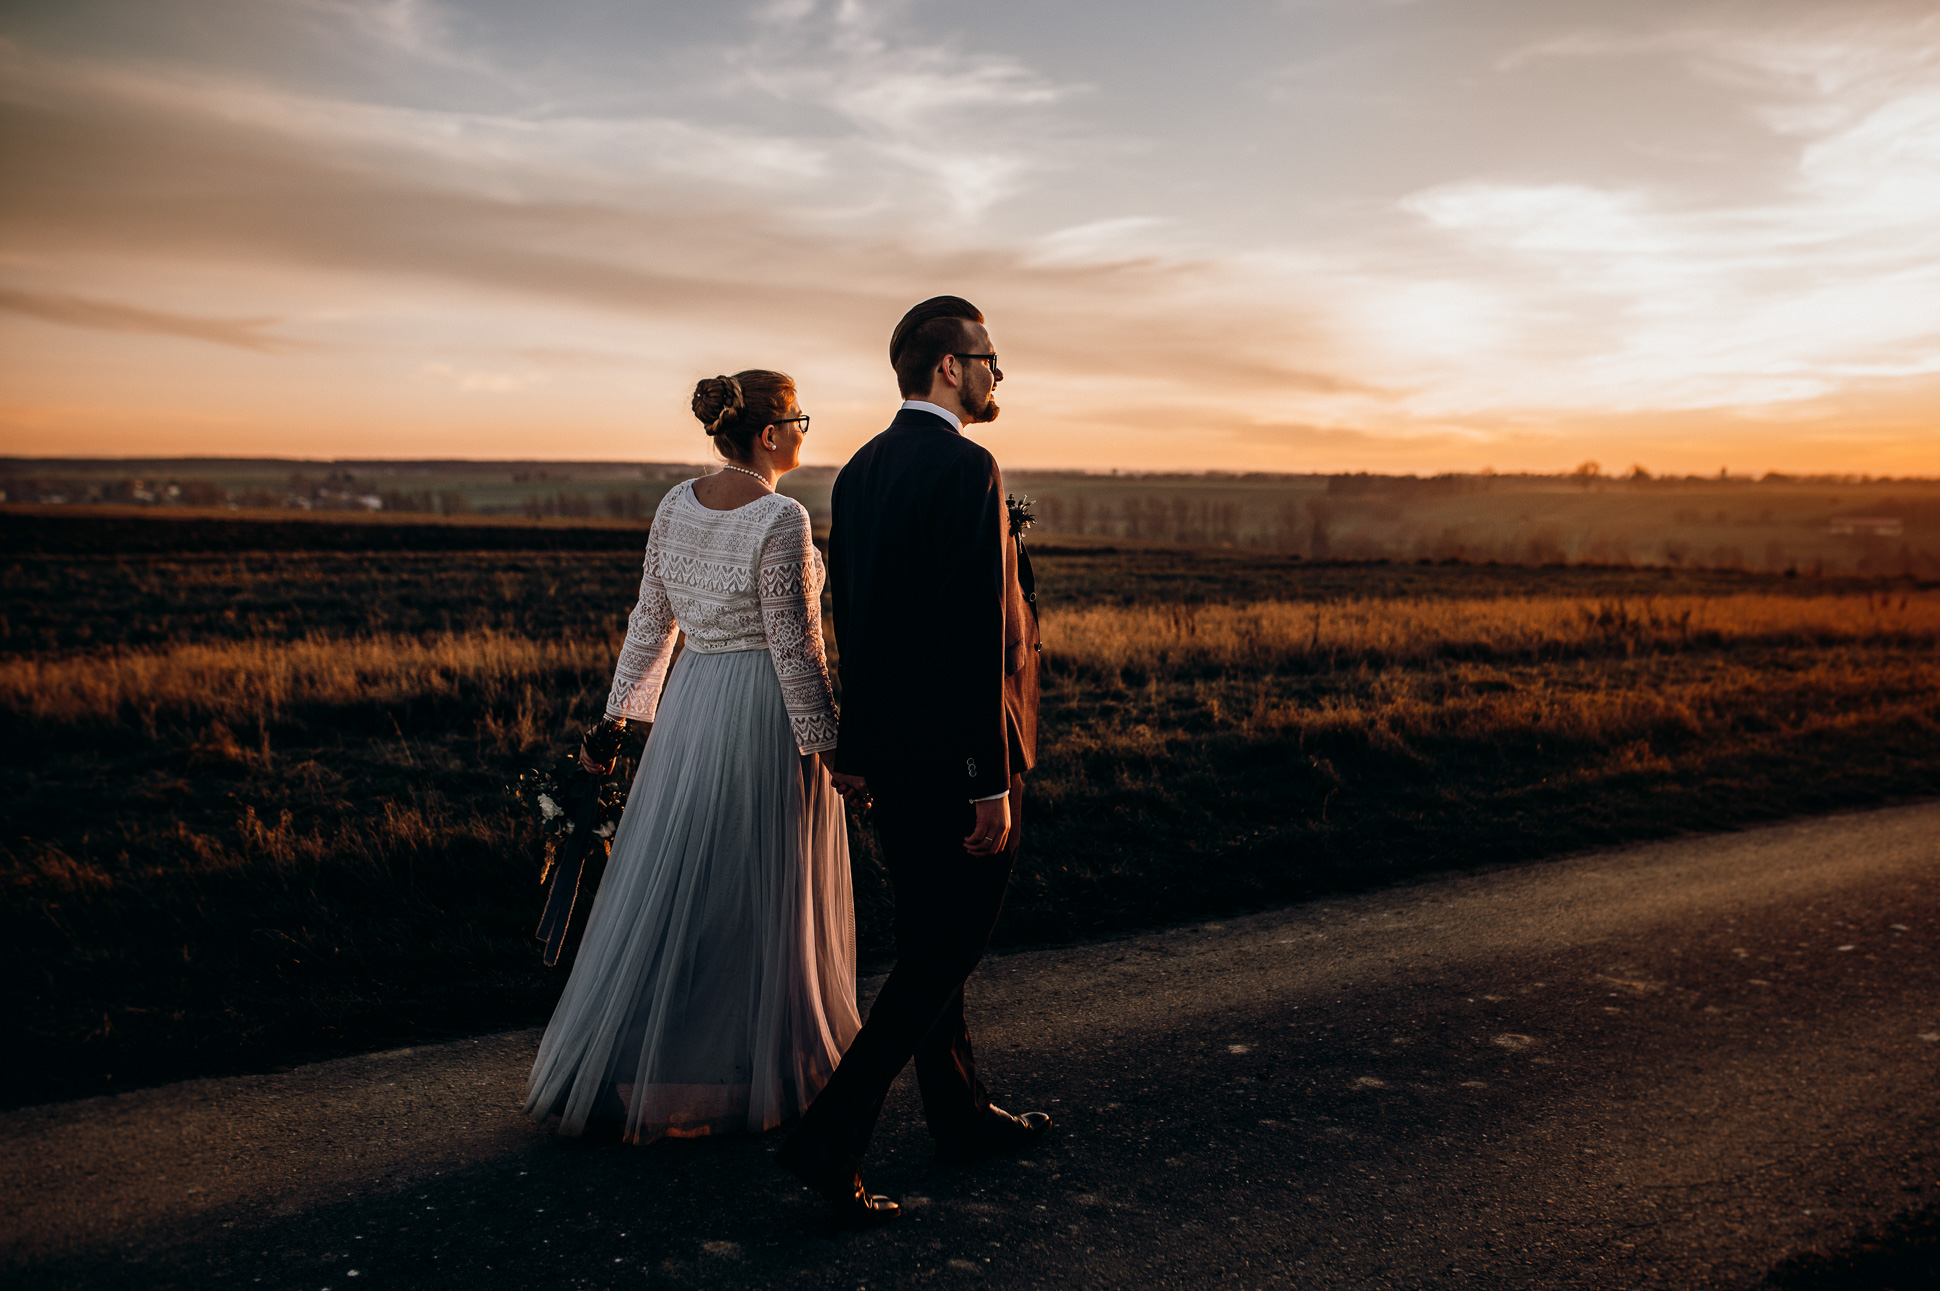 noni Brautmode, Brautpaar bei Sonnenuntergang auf Feldweg, händchenhaltend